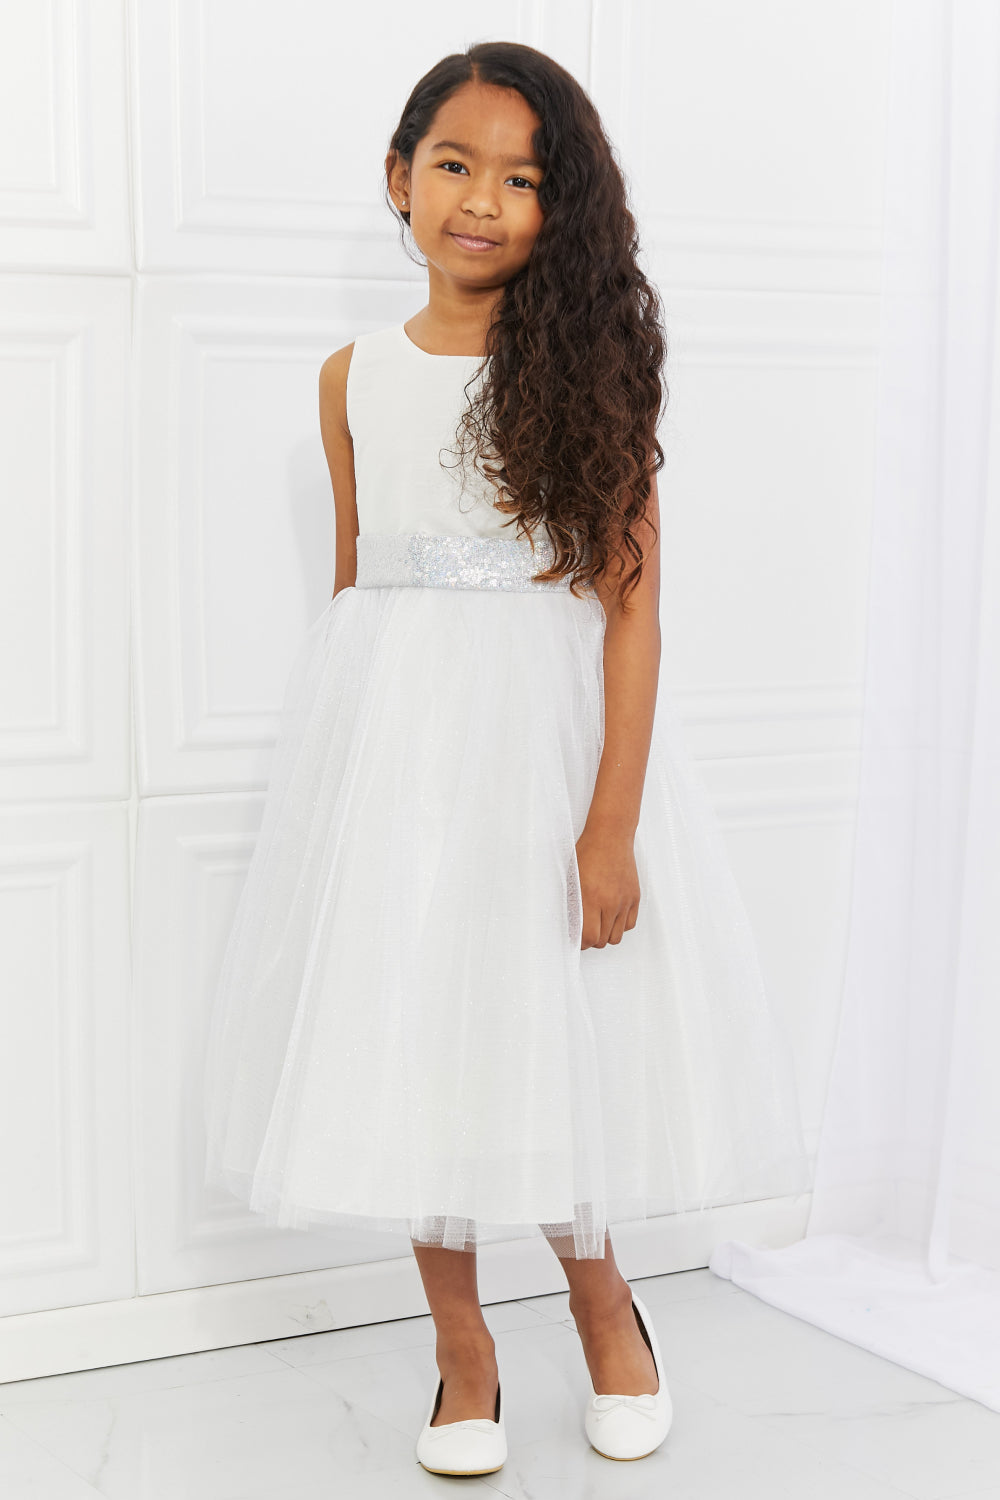 Kid's Dream Little Miss Classy Tutu Dress in Icy White | - CHANELIA